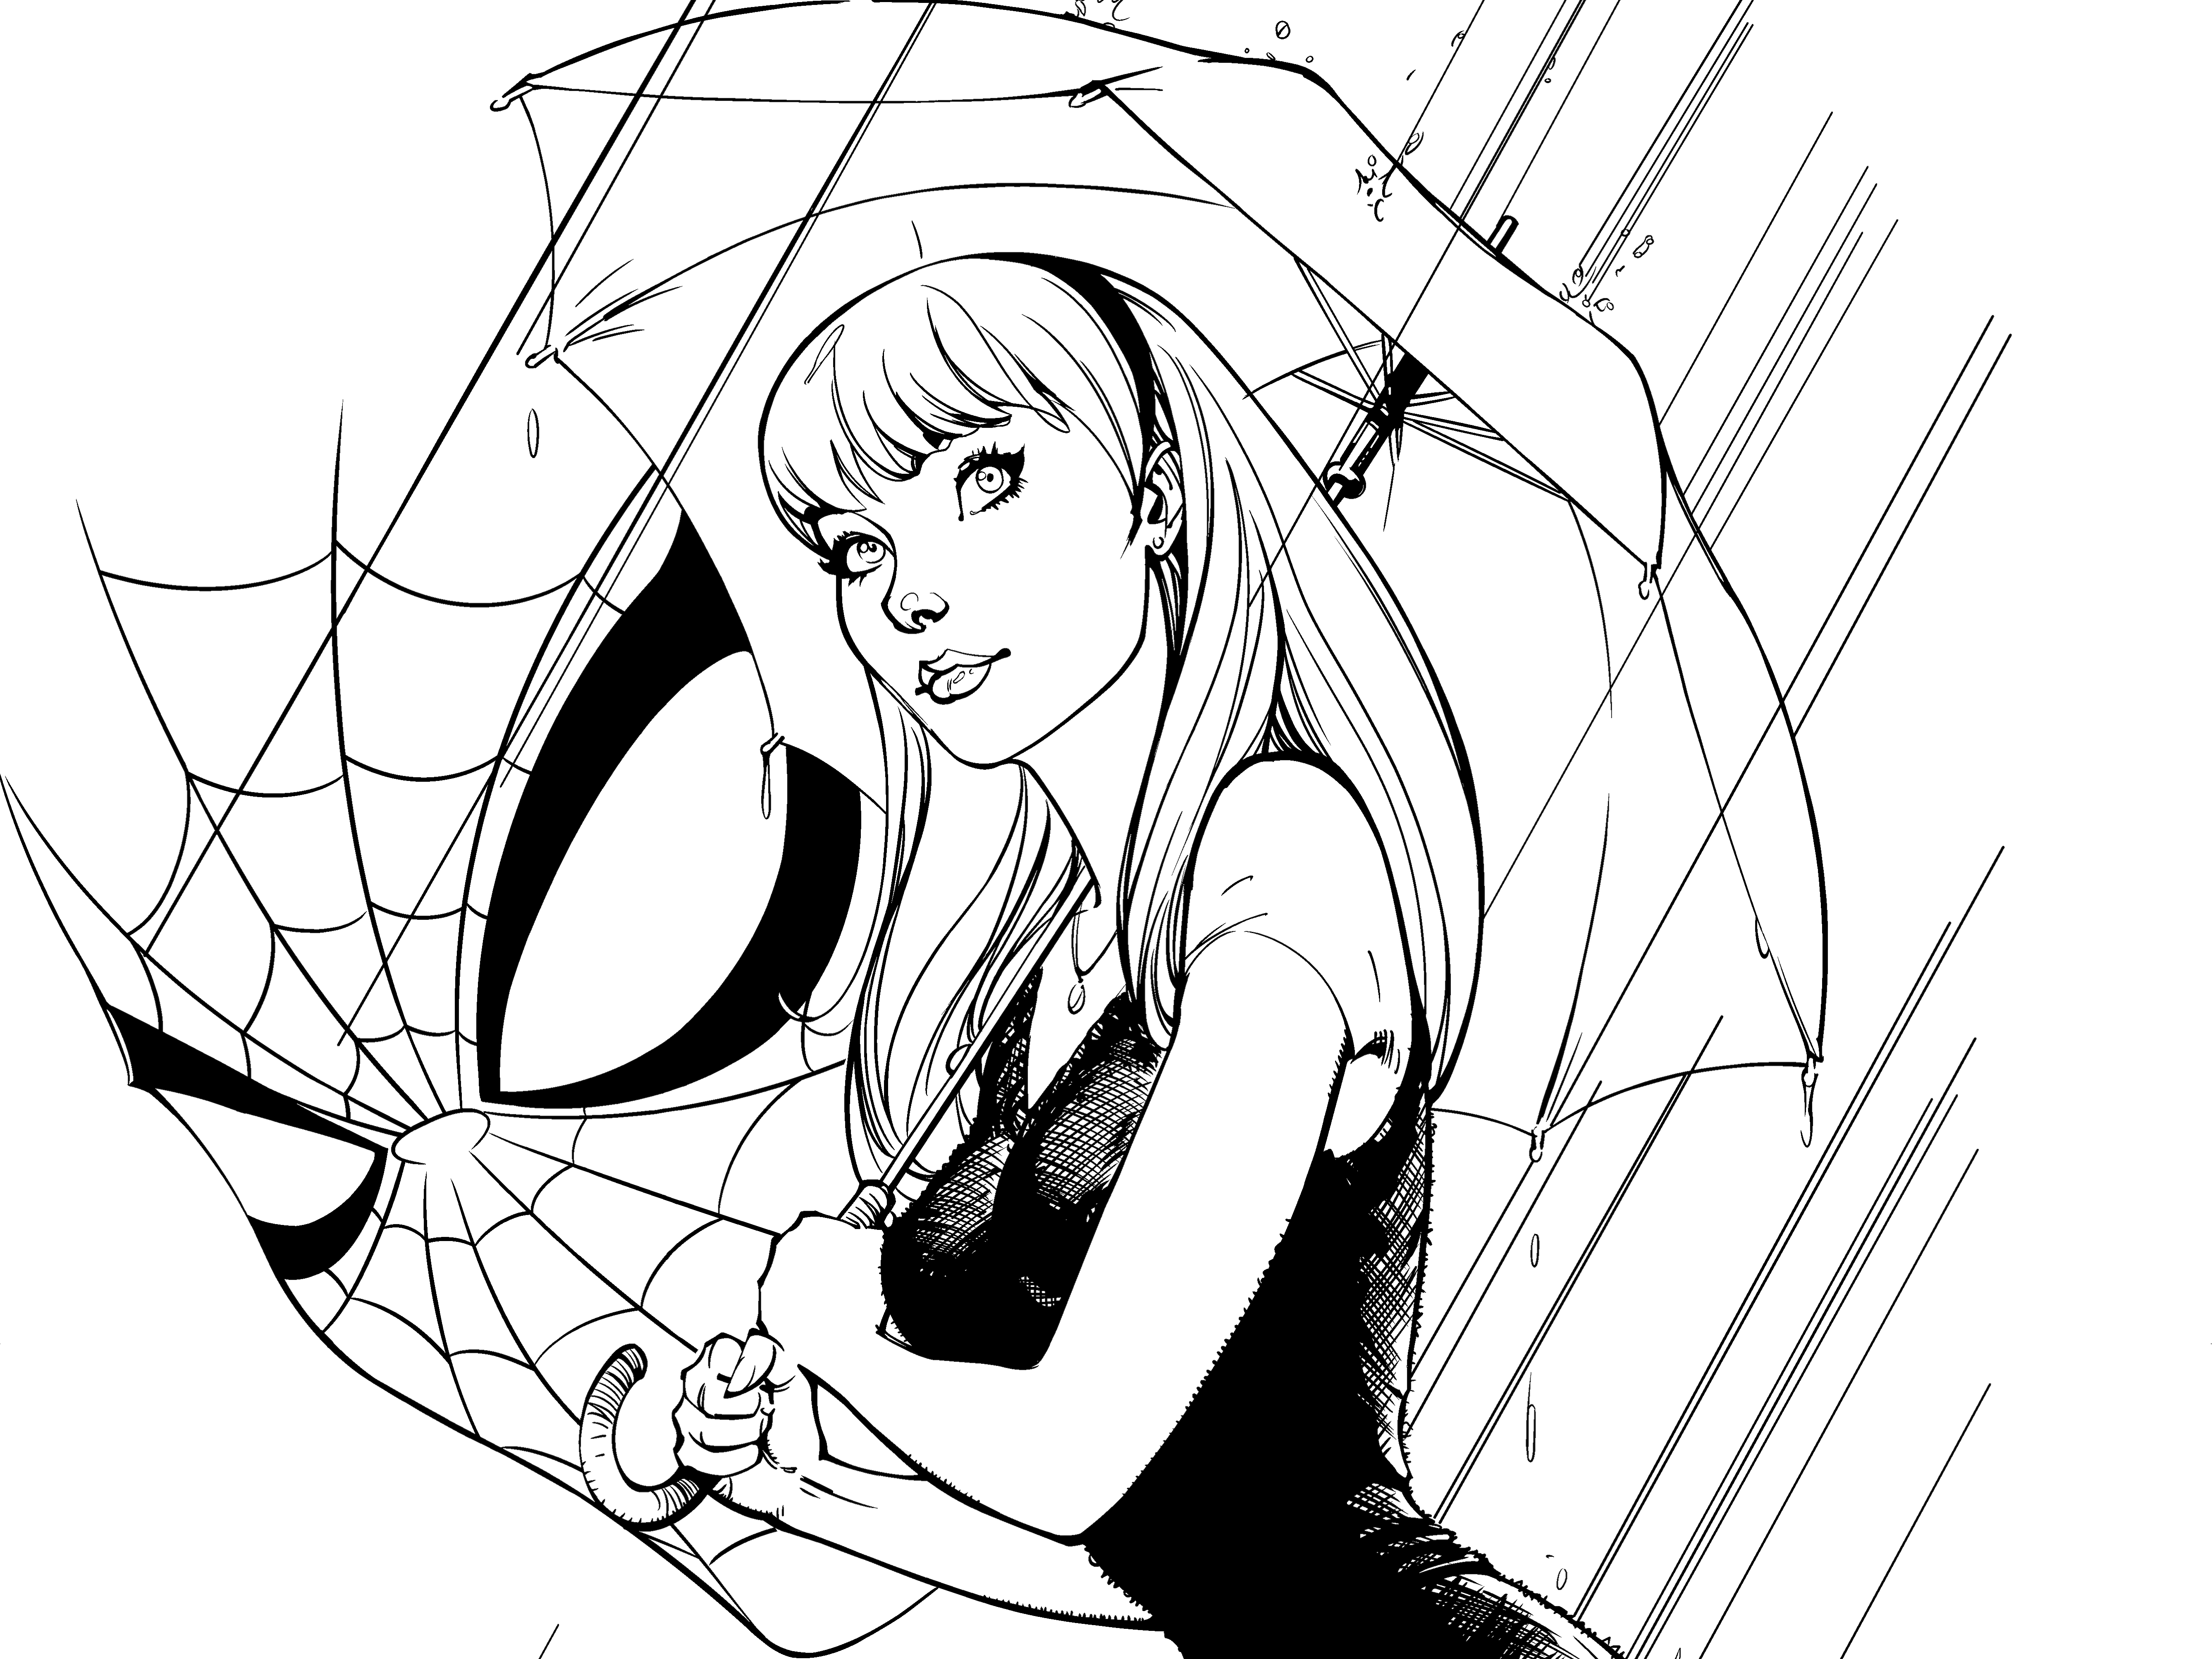 Comics Gwen Stacy HD Wallpaper | Background Image